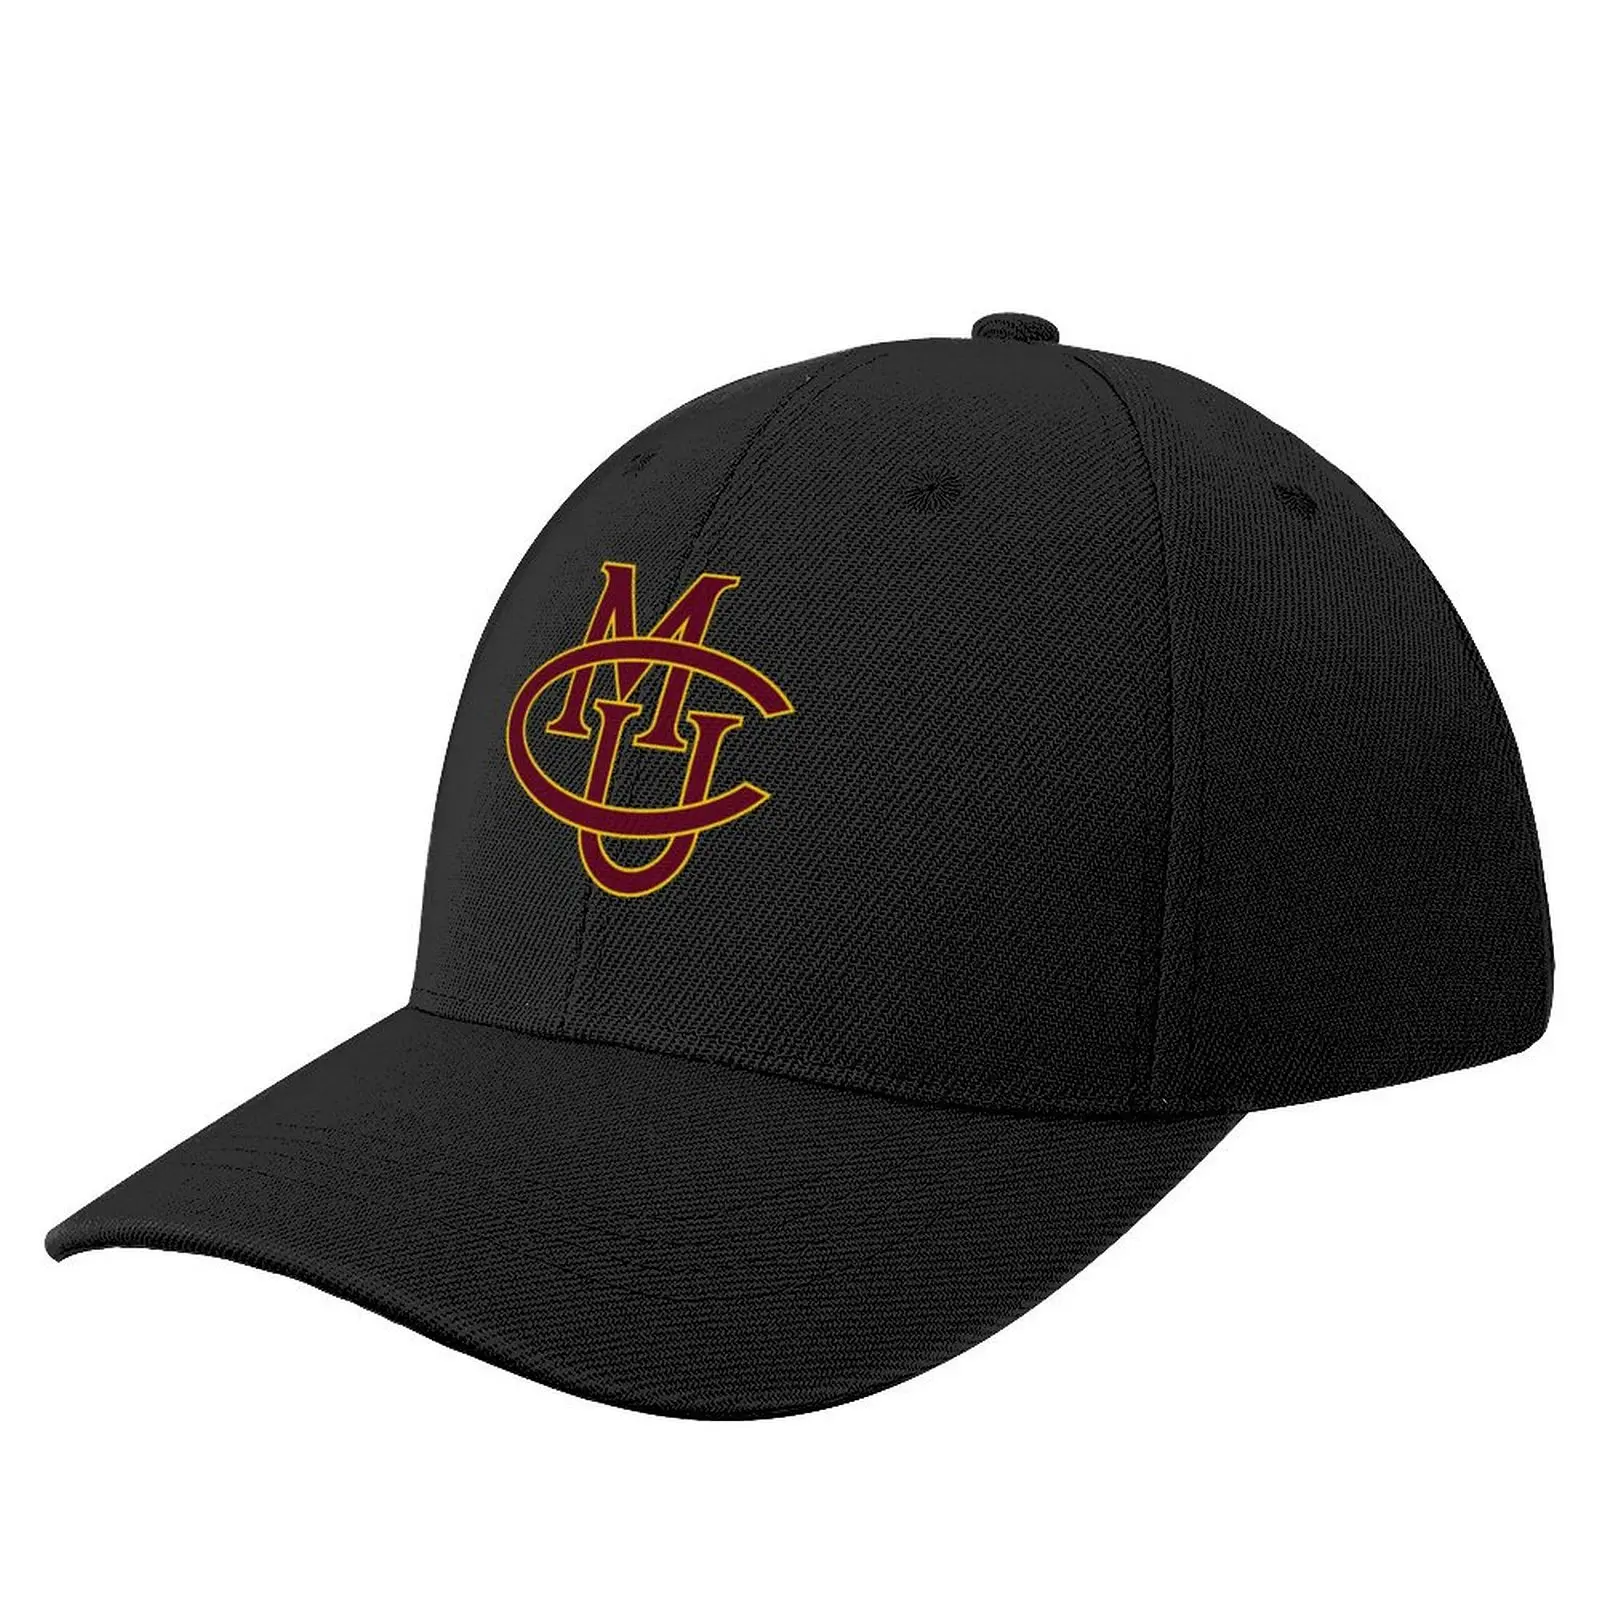 

Colorado Mesa University Baseball Cap Hip Hop Big Size Hat Sunhat For Men Women's